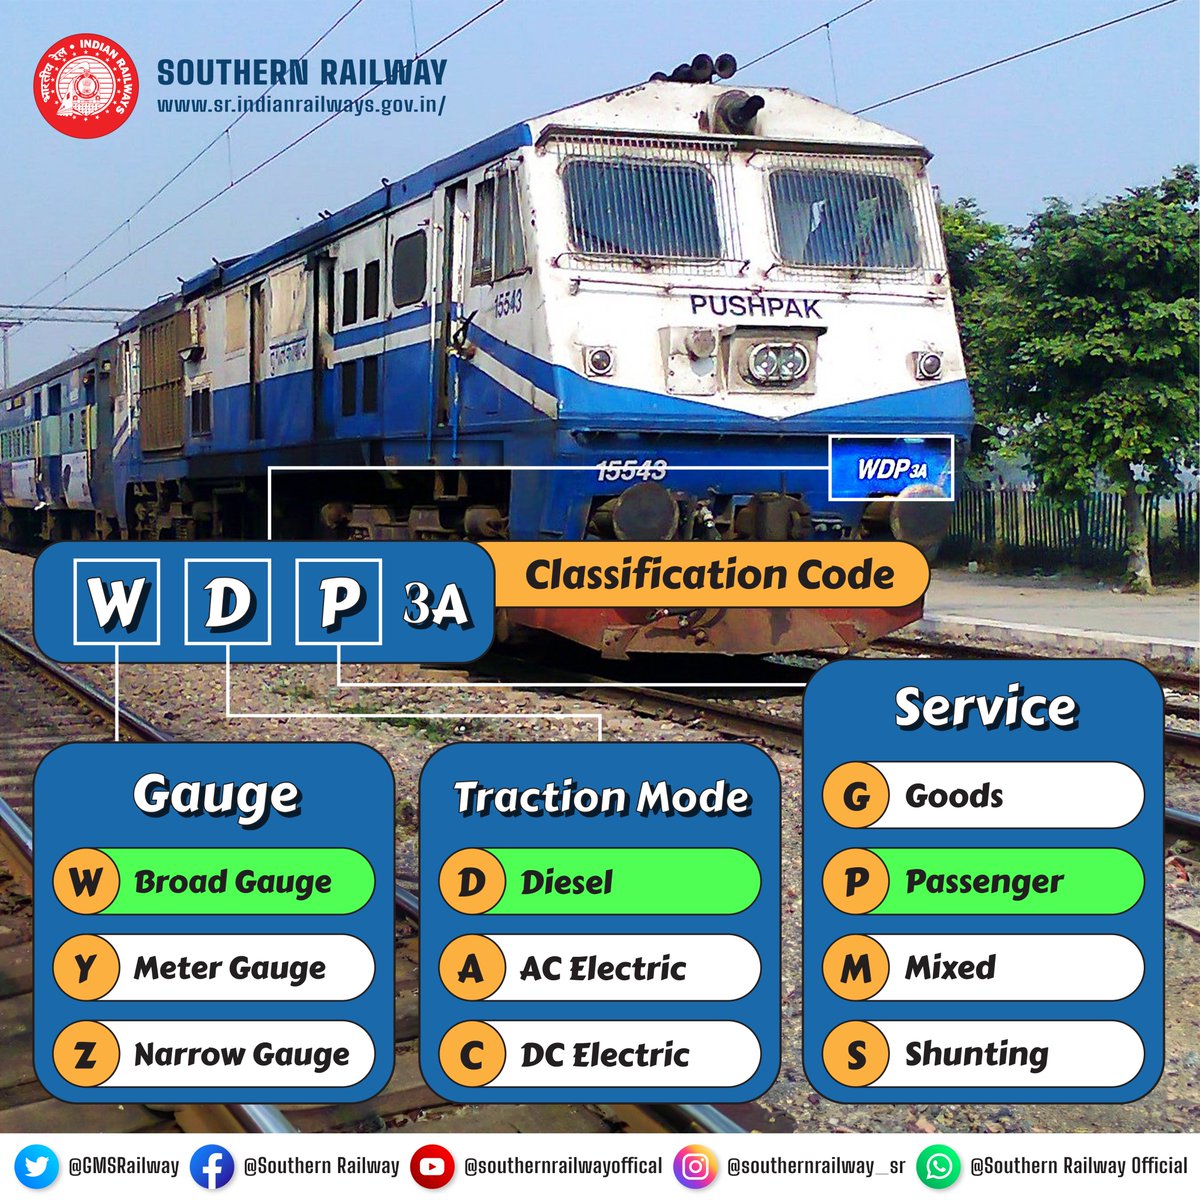 #KnowYourLocomotives

Decode the Indian locomotive coding! 
WDP3A - W(Broad Gauge) D(Diesel) P(Passenger) 3A(horse power)

Learn the alphanumeric terminologies that define our rail workhorses.

#RailwayTerminology #LocomotiveCodes